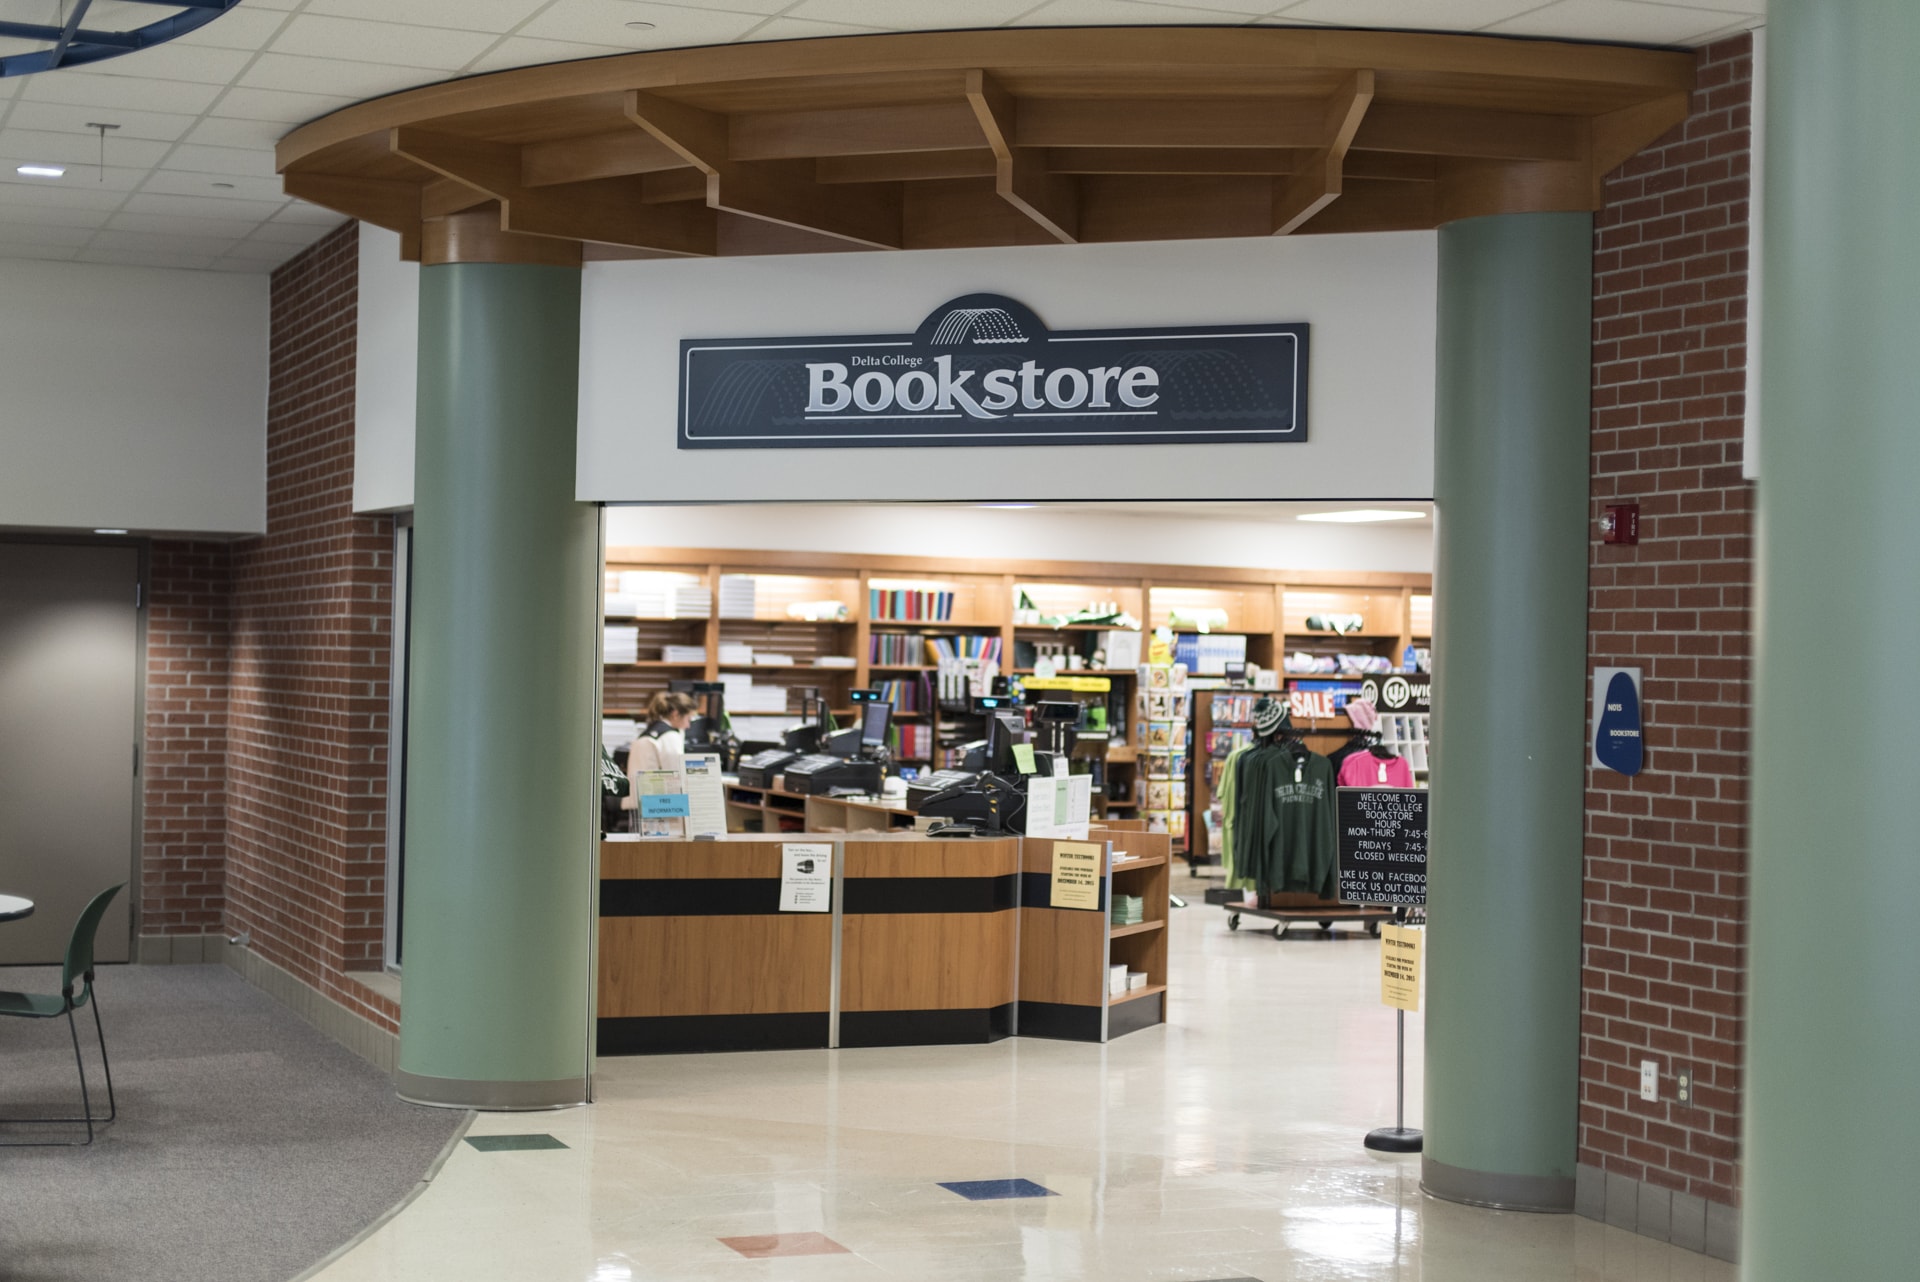 The Bookstore entrance